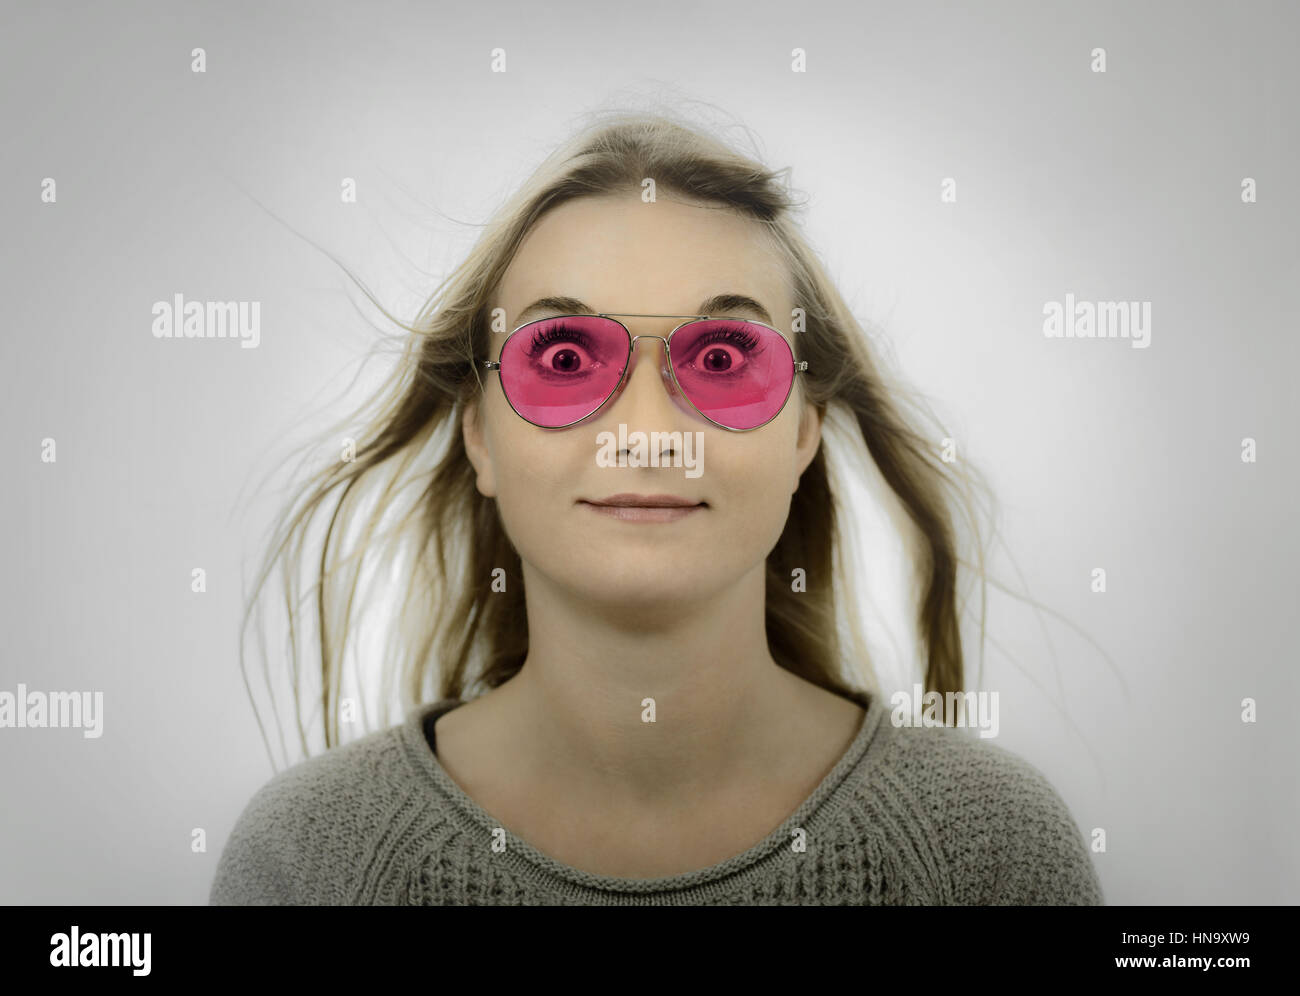 Woman wearing rose tinted sunglasses Stock Photo - Alamy